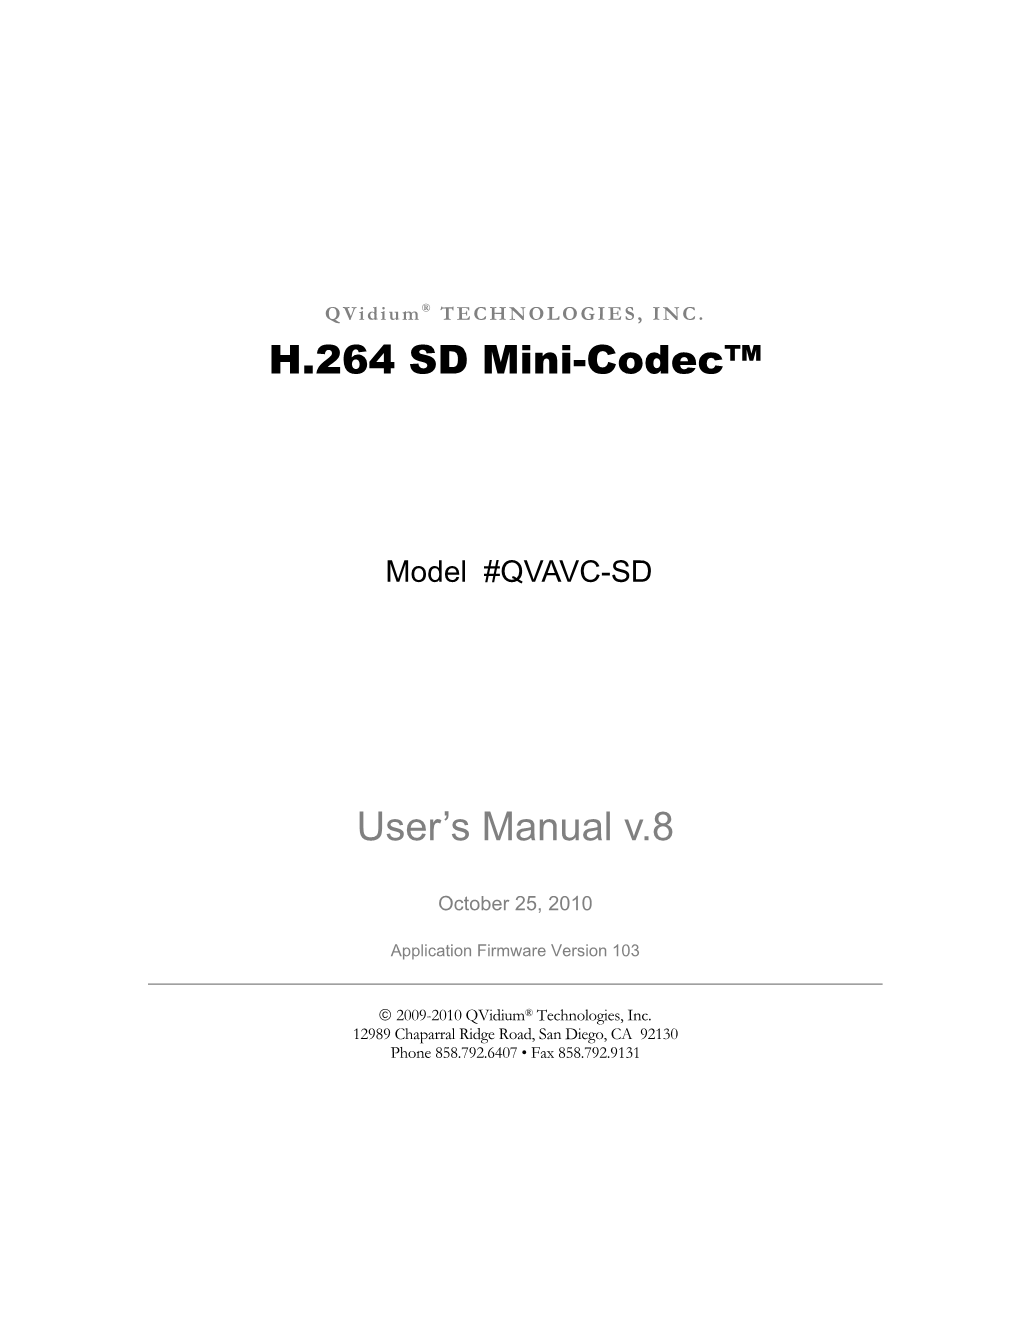 QVAVC-SD Codec Manual-V8.Pdf